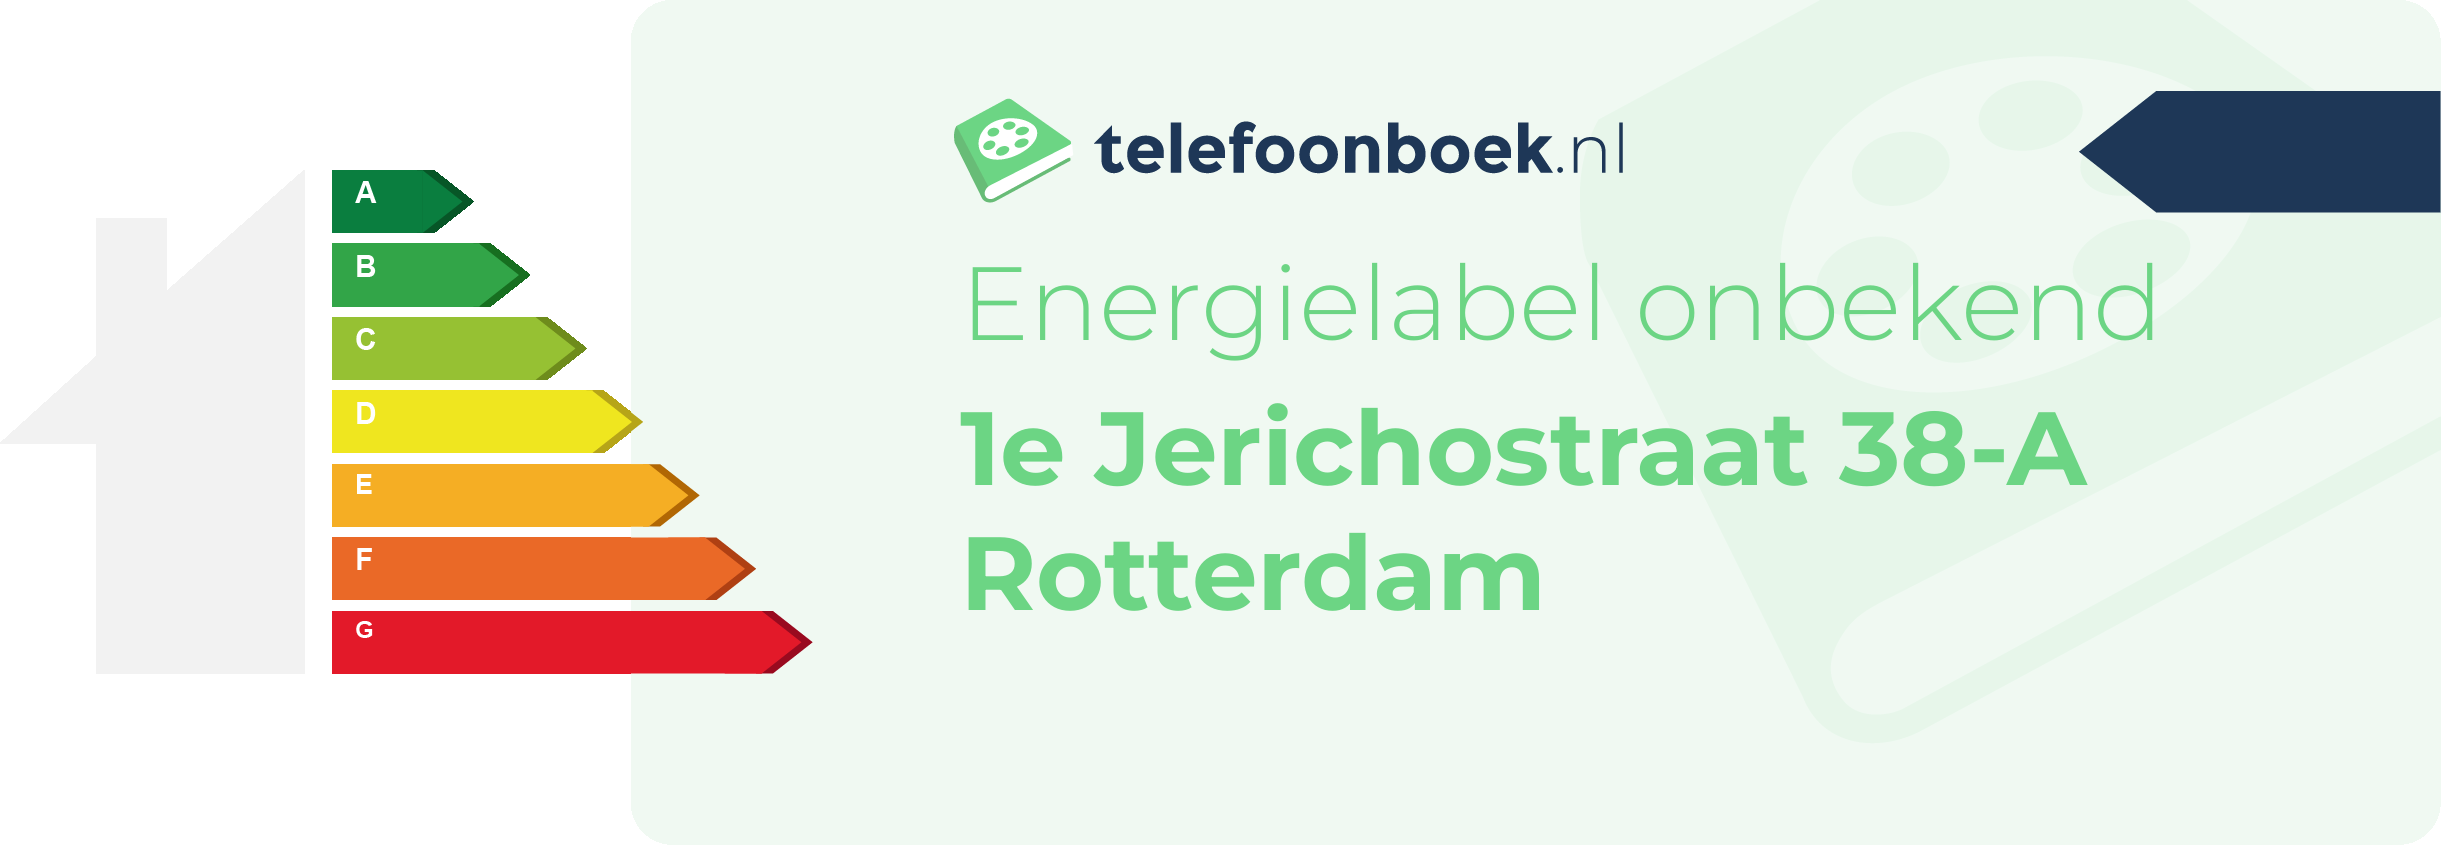 Energielabel 1e Jerichostraat 38-A Rotterdam